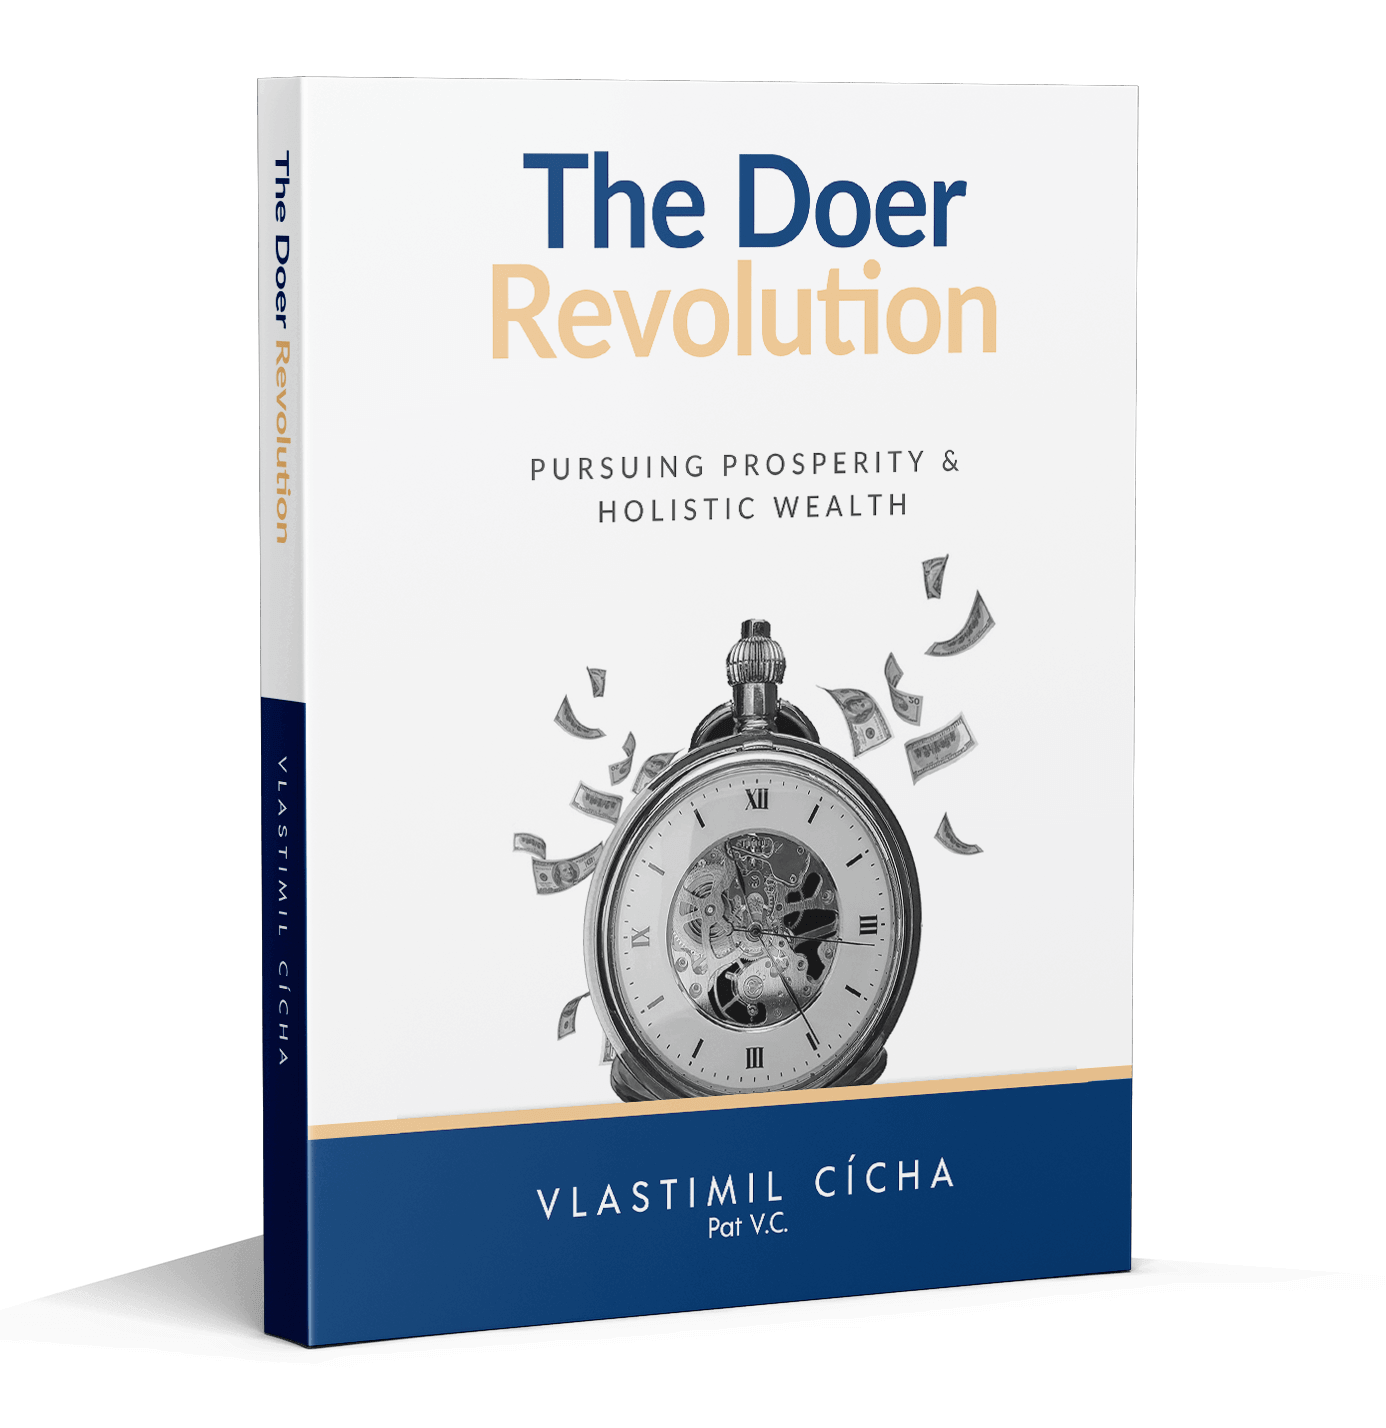 The Doer Revolution - Pursuing Prosperity & Holistic Wealth